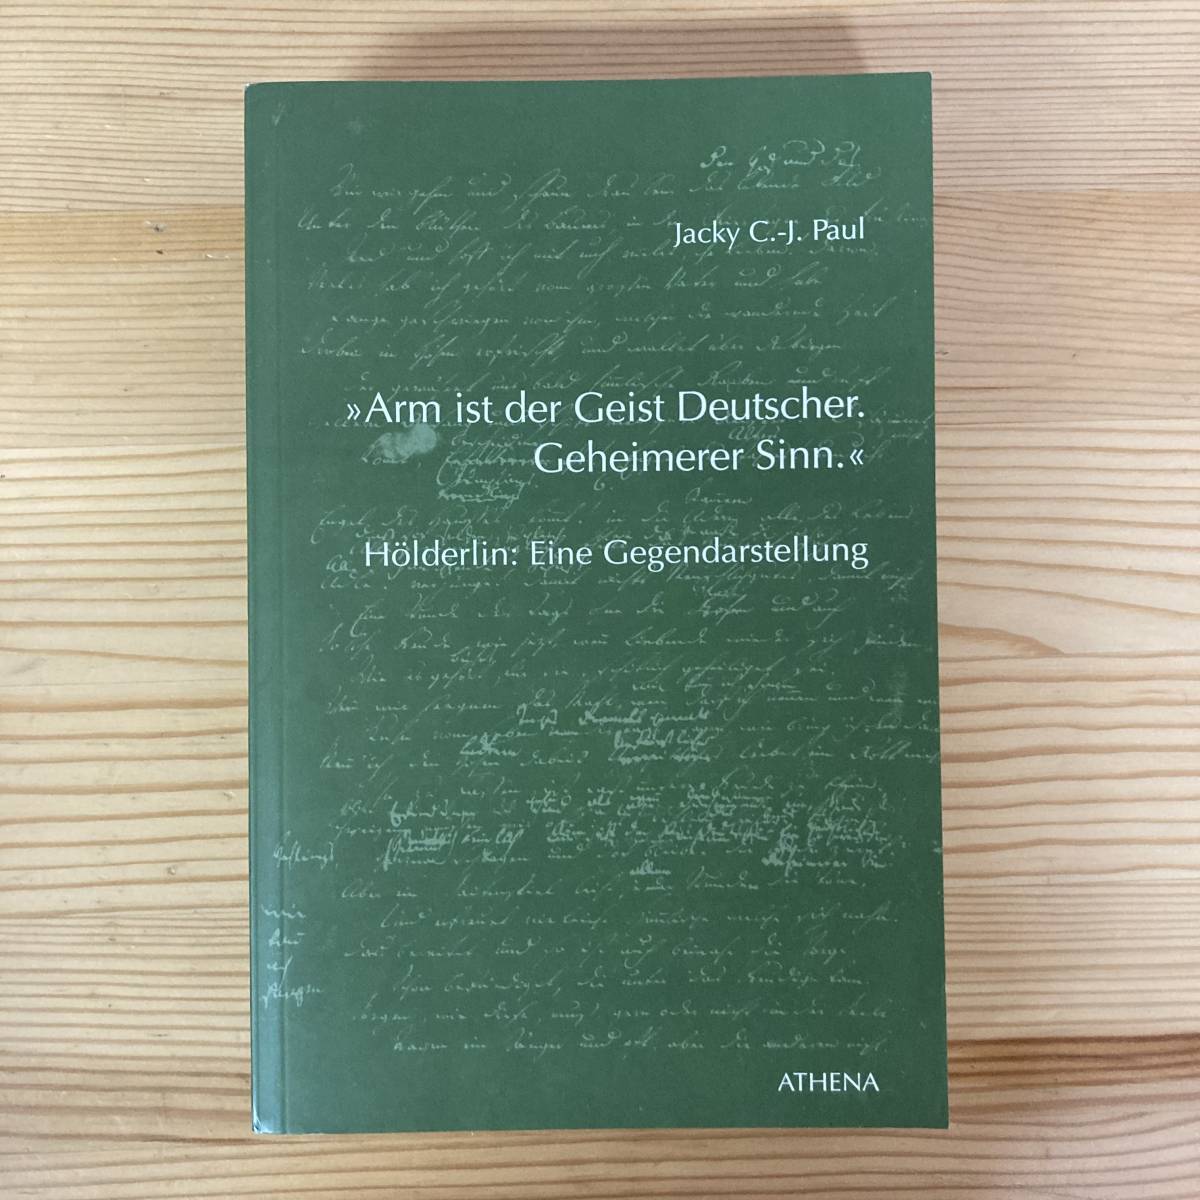 【独語洋書】Arm ist der Geist Deutscher. Geheimerer Sinn. / Jacky C.-J.Paul（著）【ヘルダーリン】_画像1